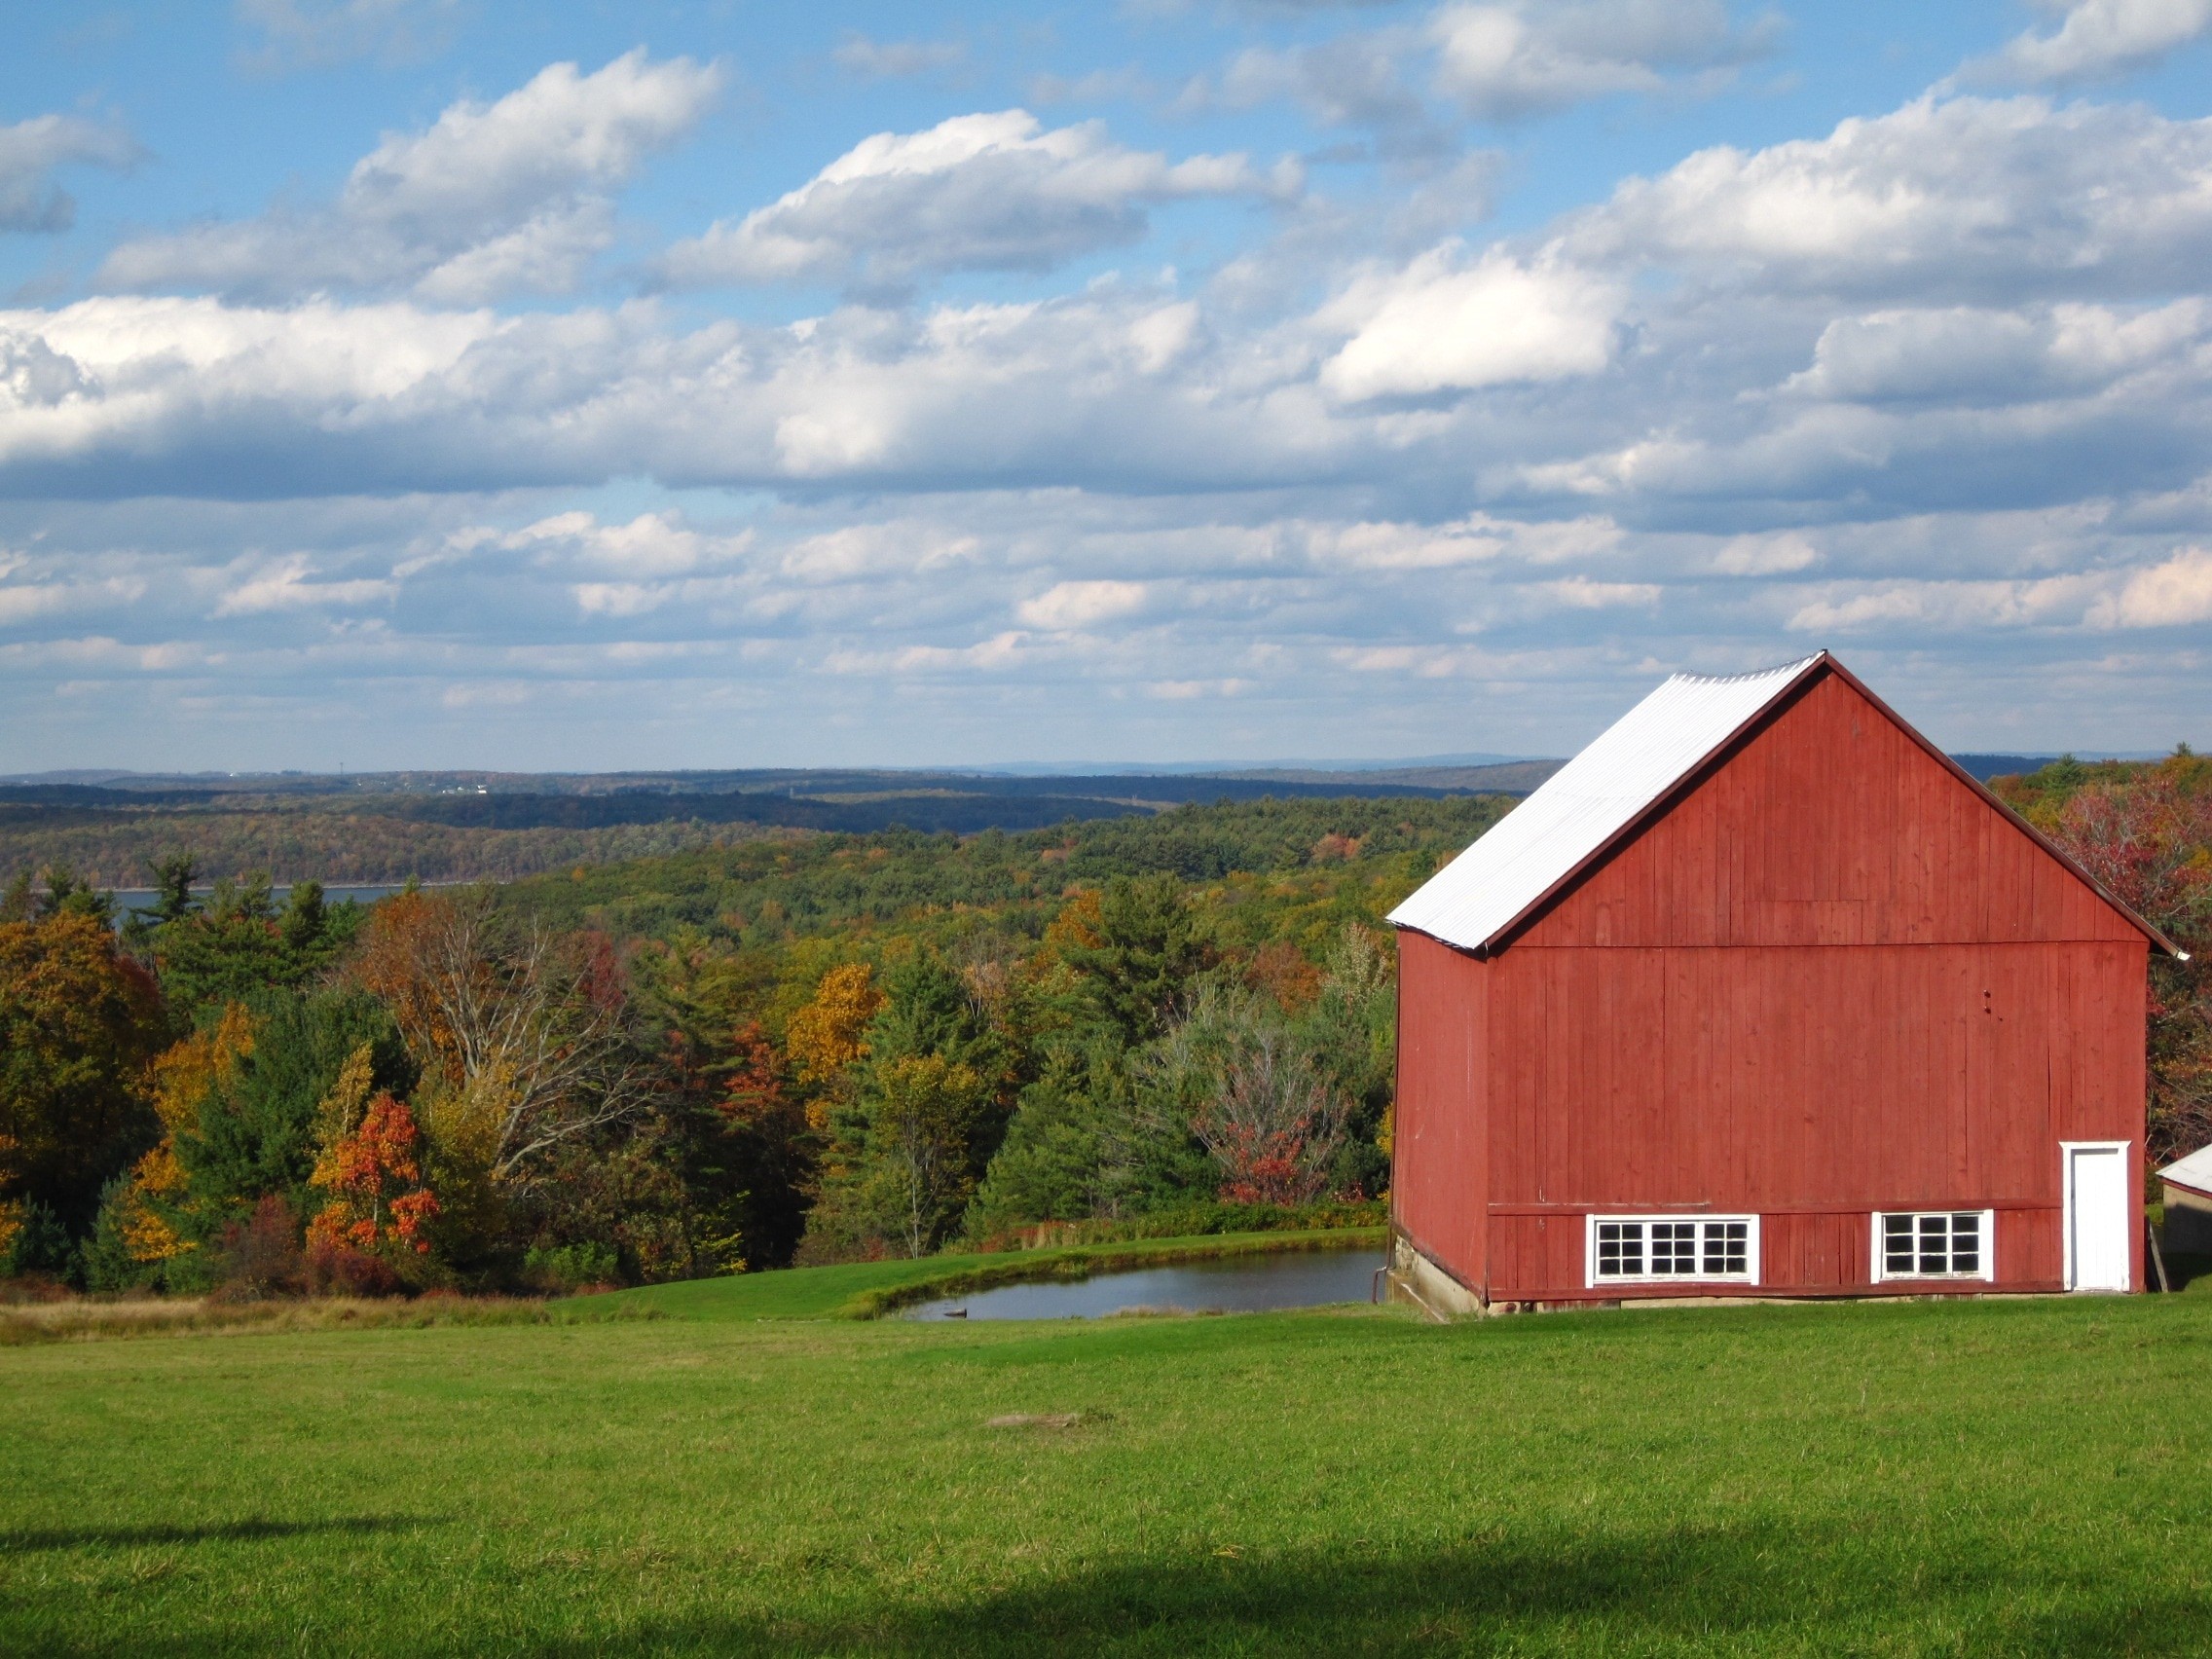 2272x1704 red barn on grass field